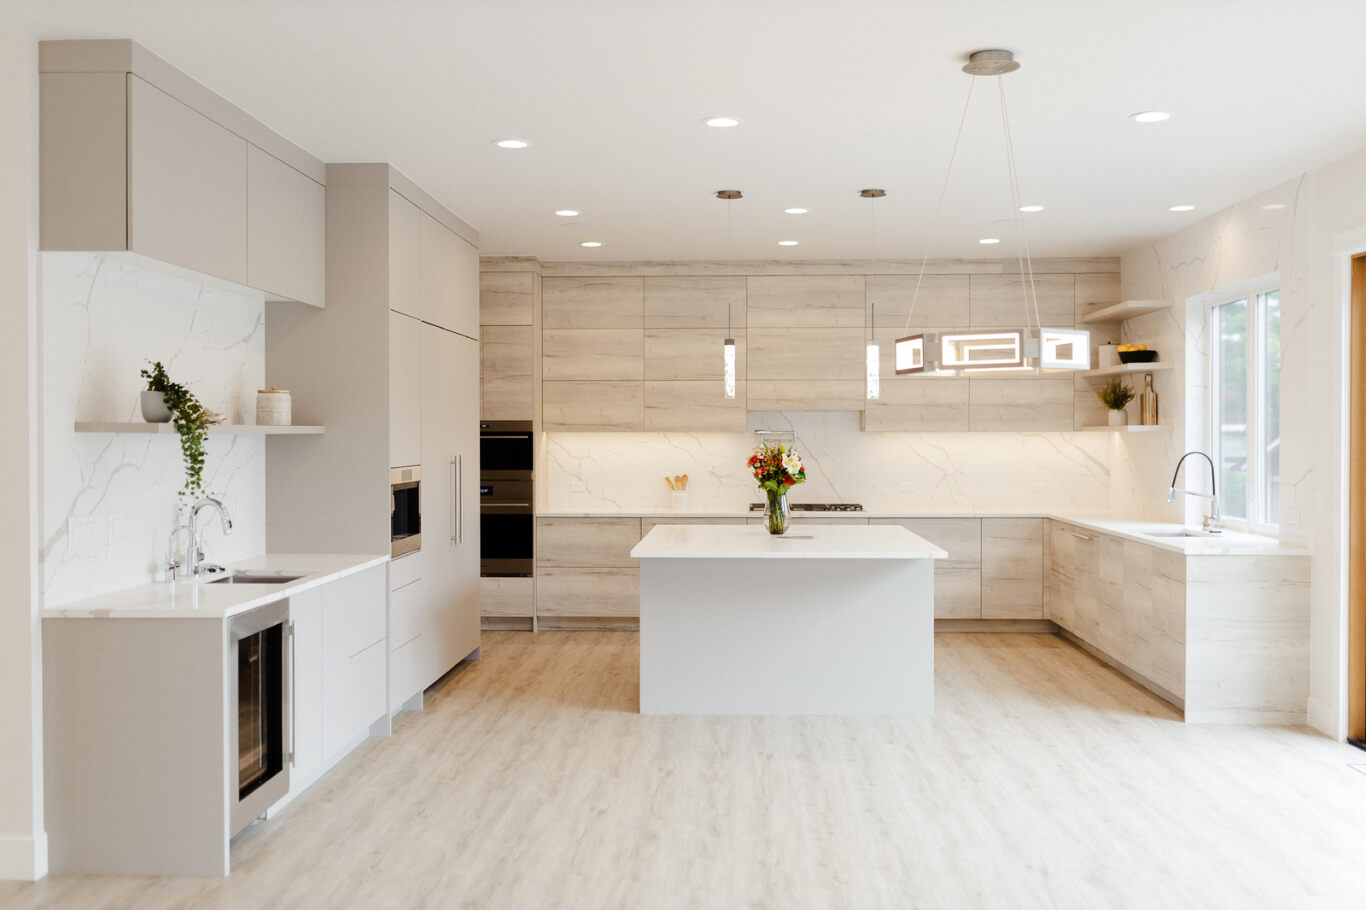 kitchen in seattle custom home with open floor plan